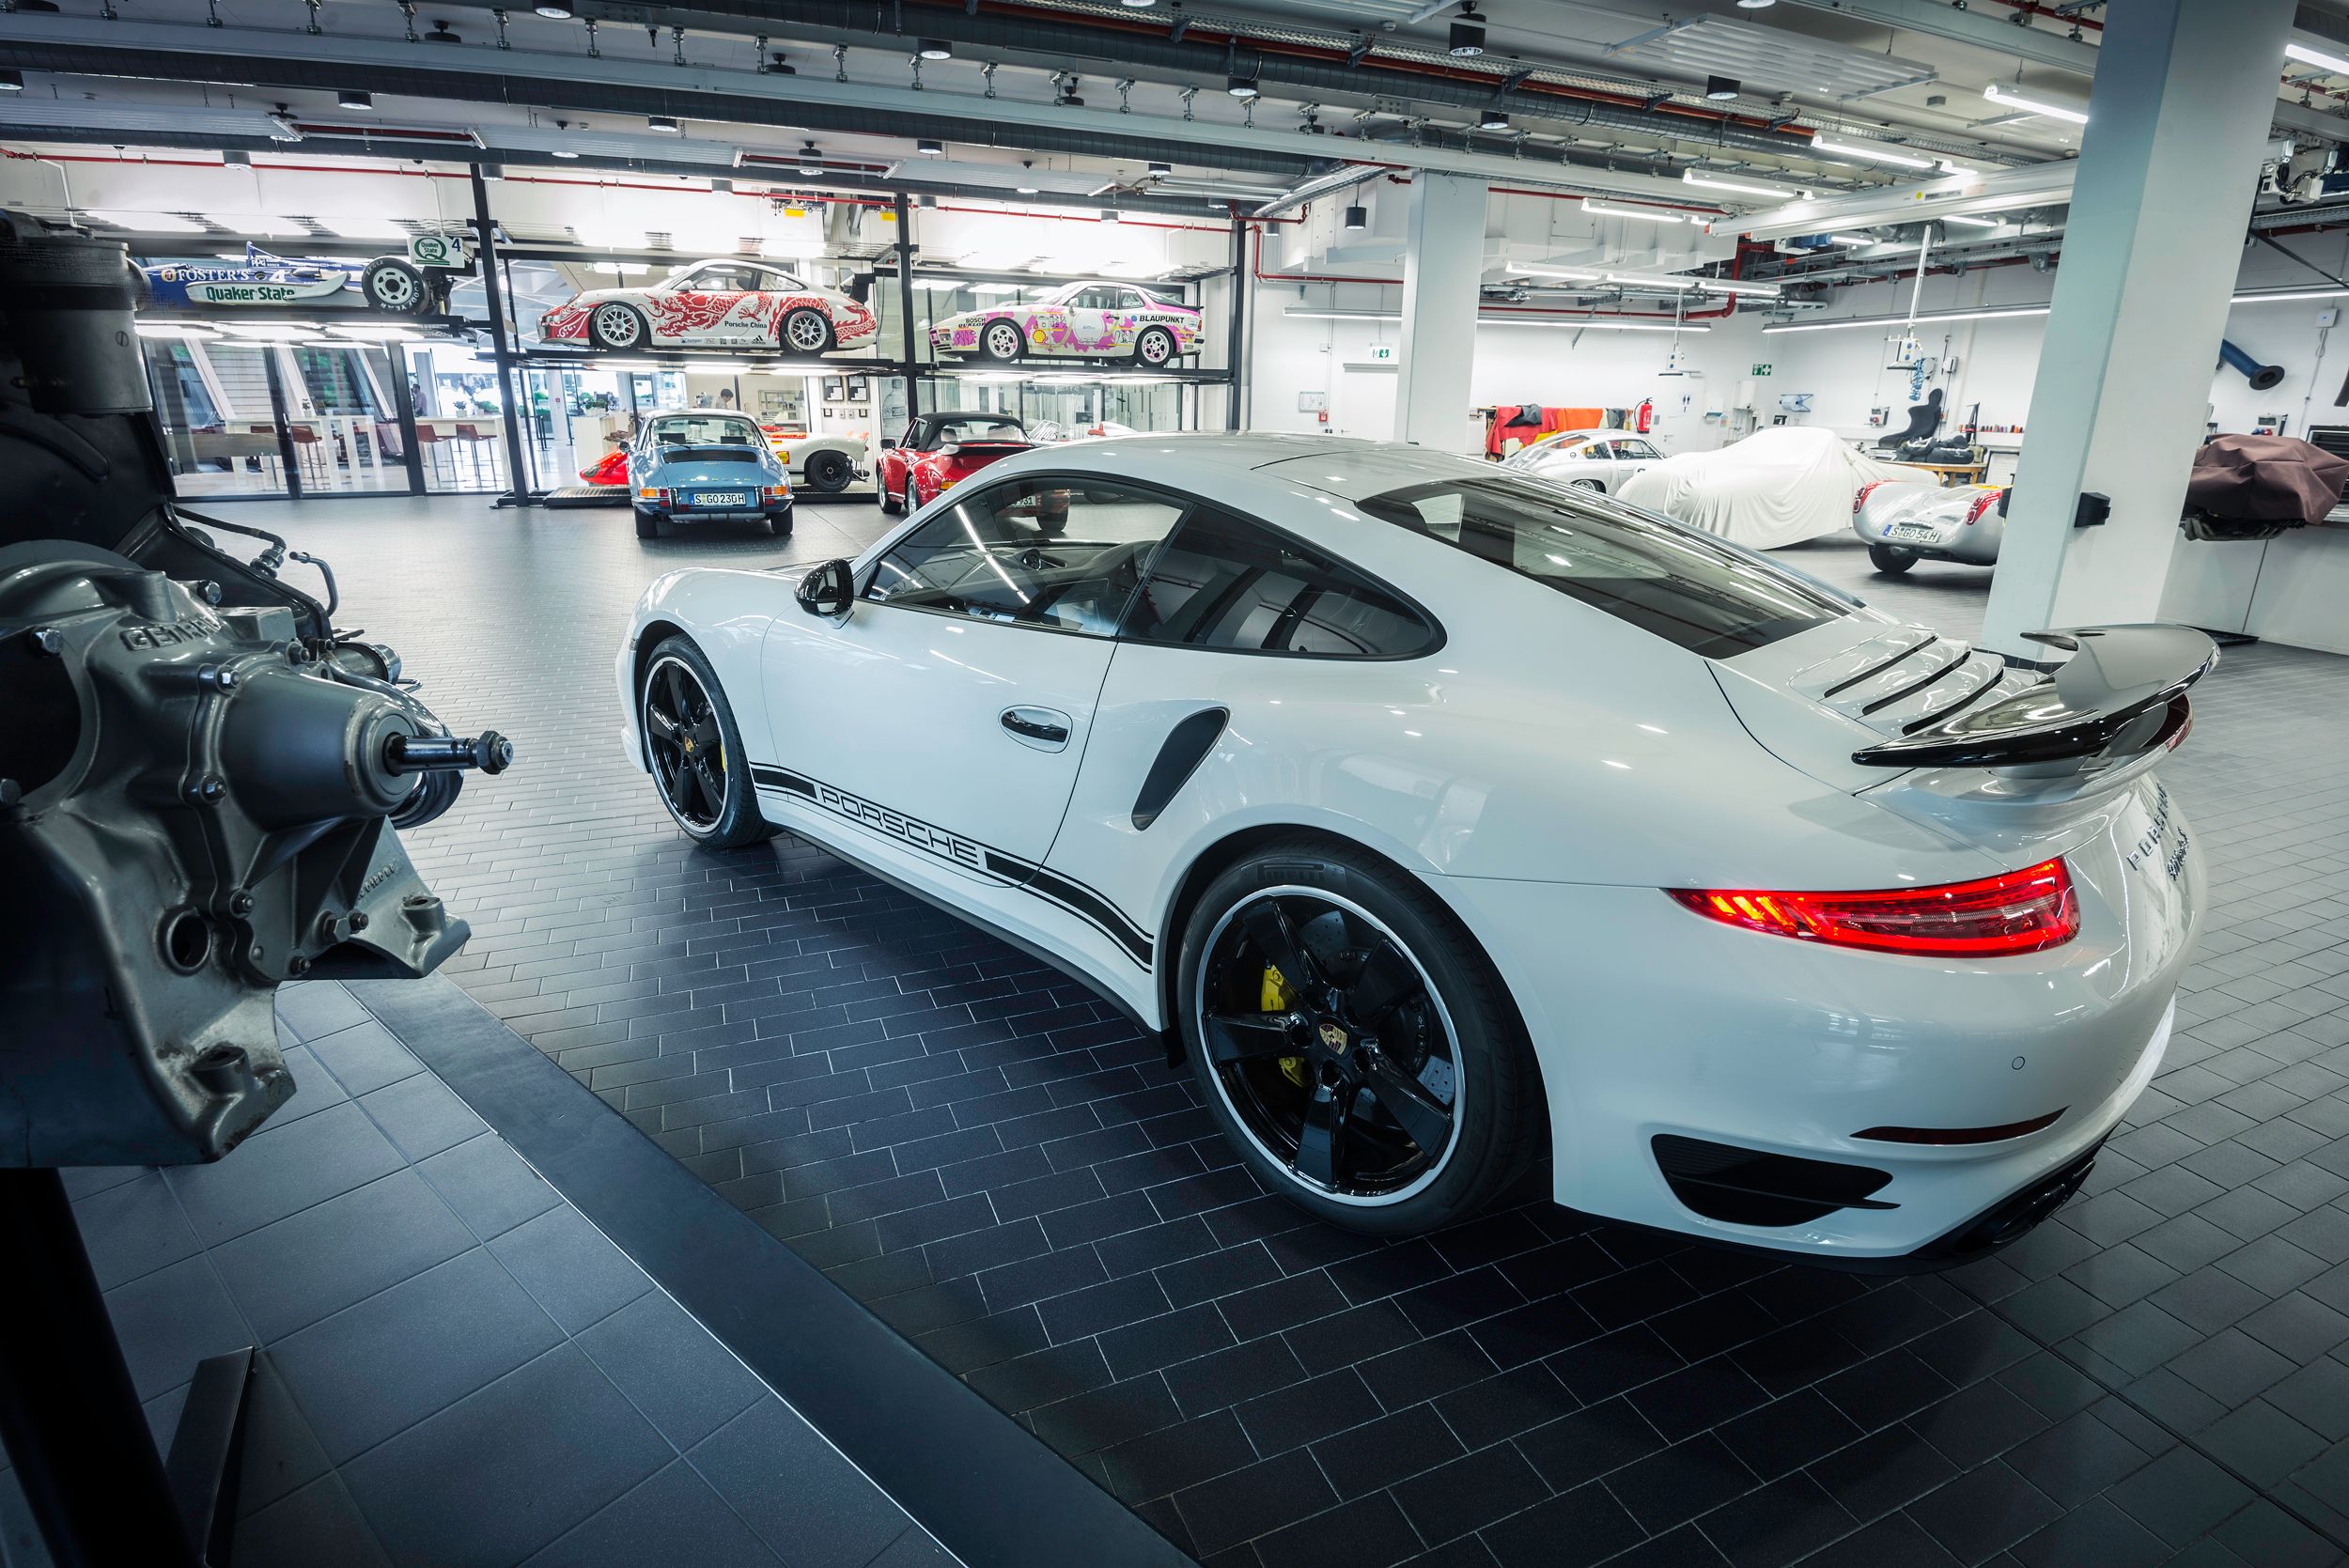 2014 Porsche 911 Turbo S Exclusive GB Edition